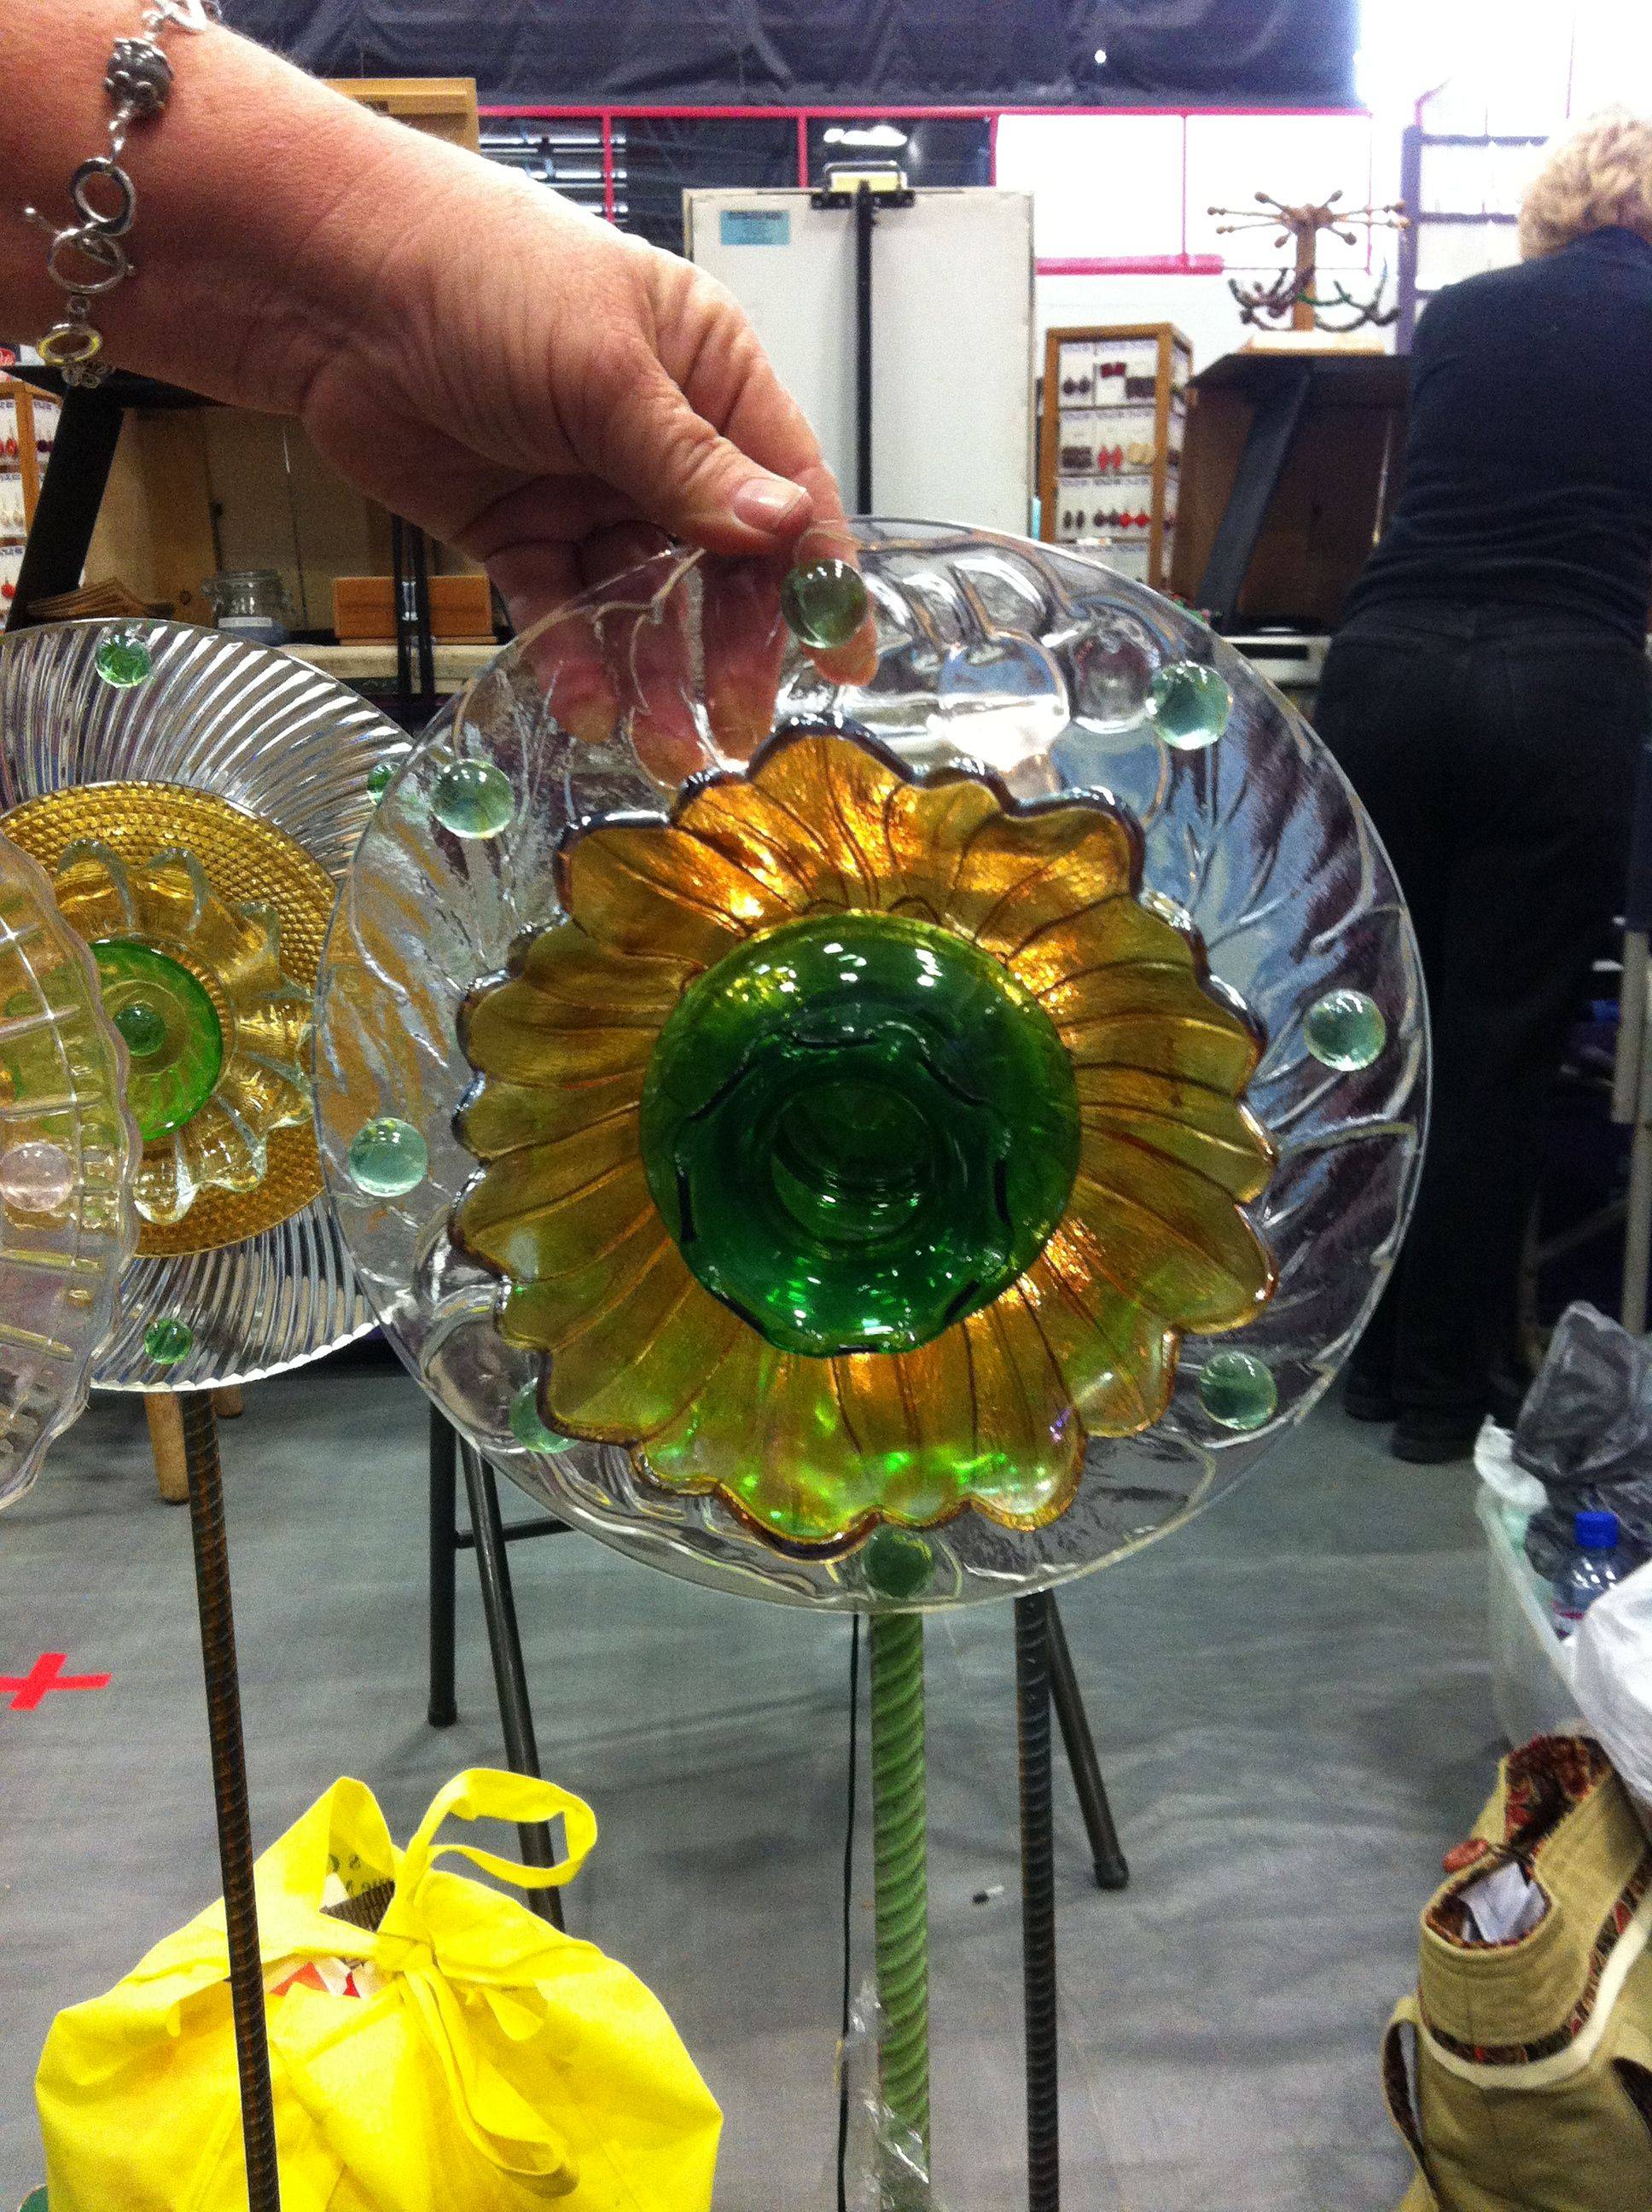 Adelicatetouchglass Garden Floweryard Artupcycledvintage Glass